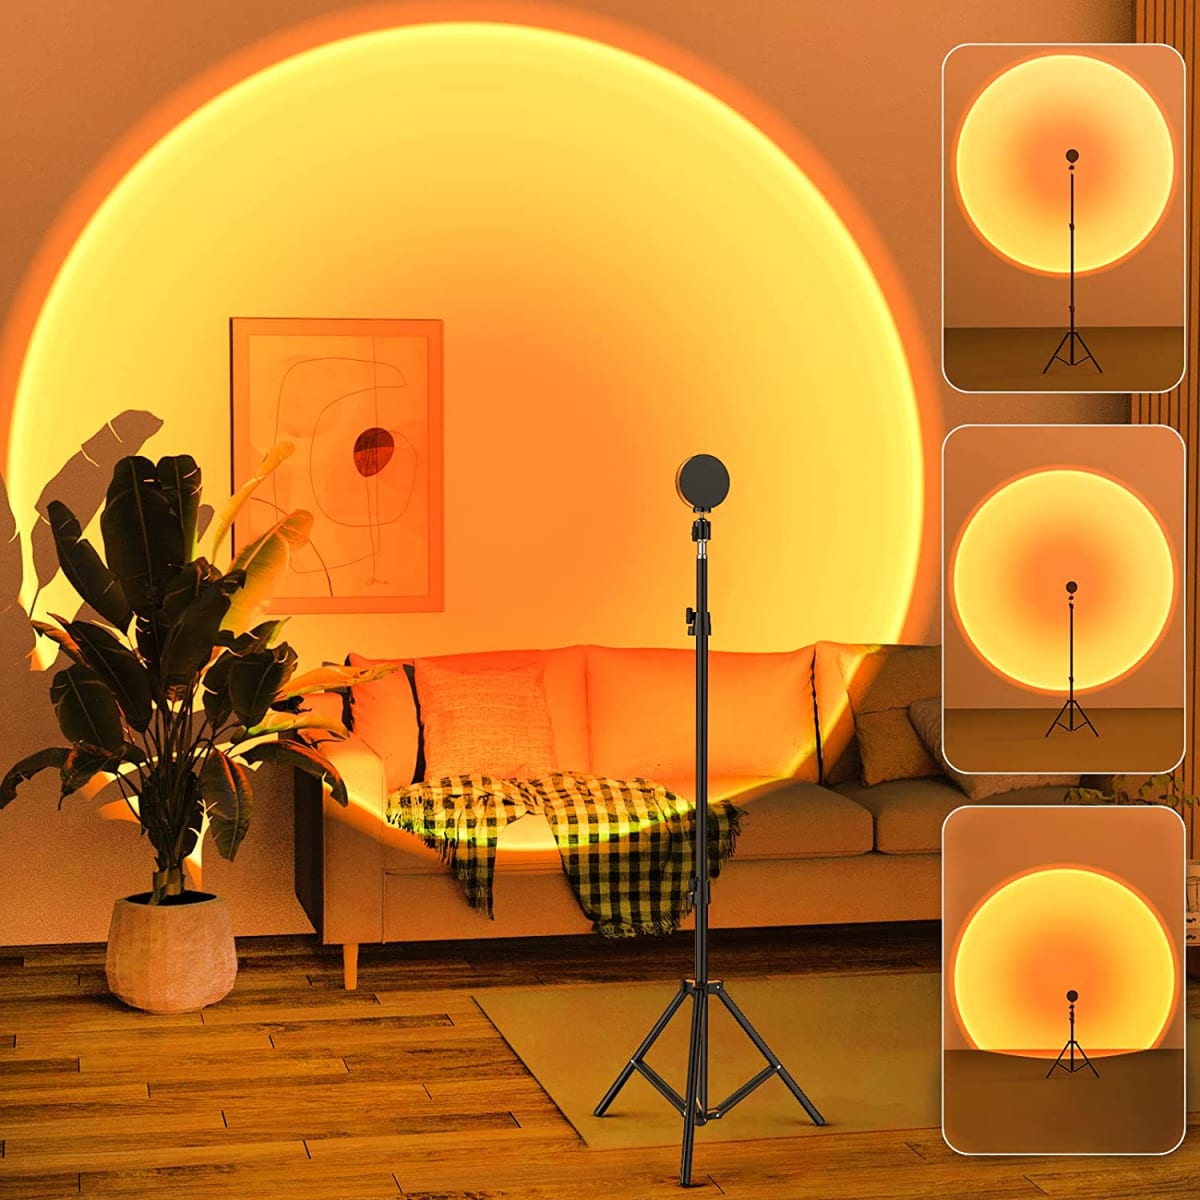 Sunset Floor Lamp Projection